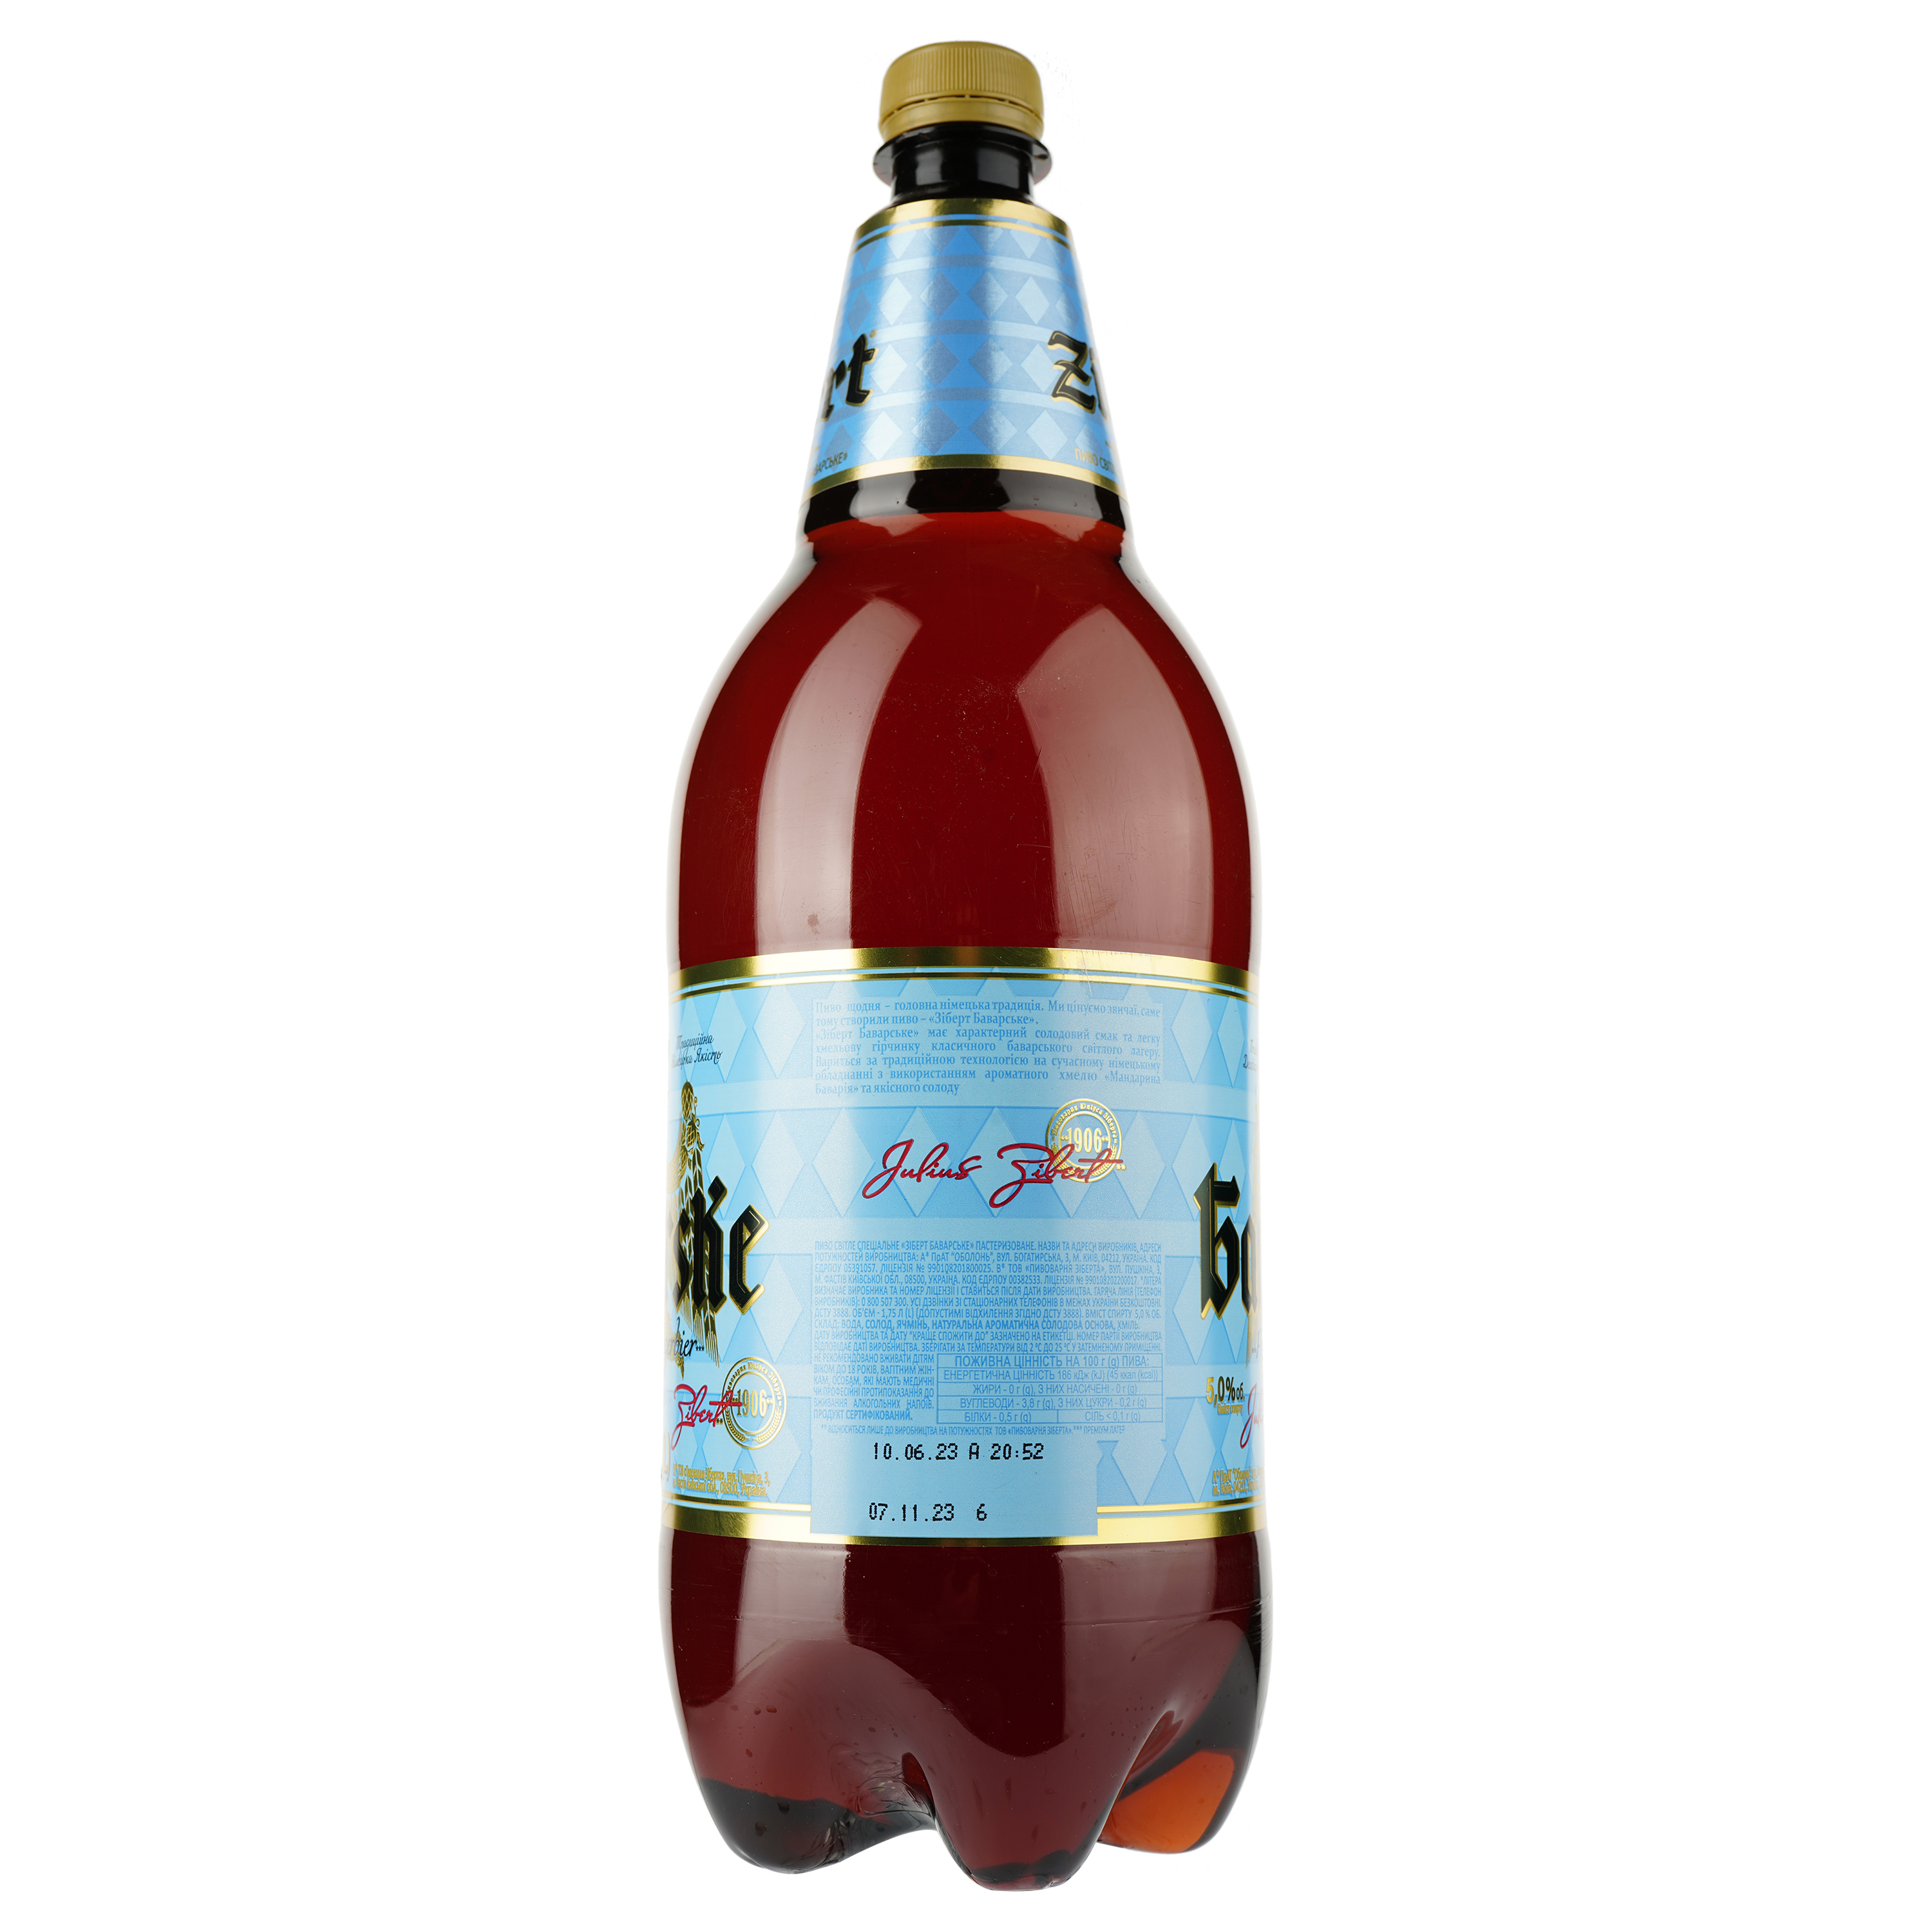 Пиво Zibert Баварское светлое, 5%, 1,75 л - фото 2